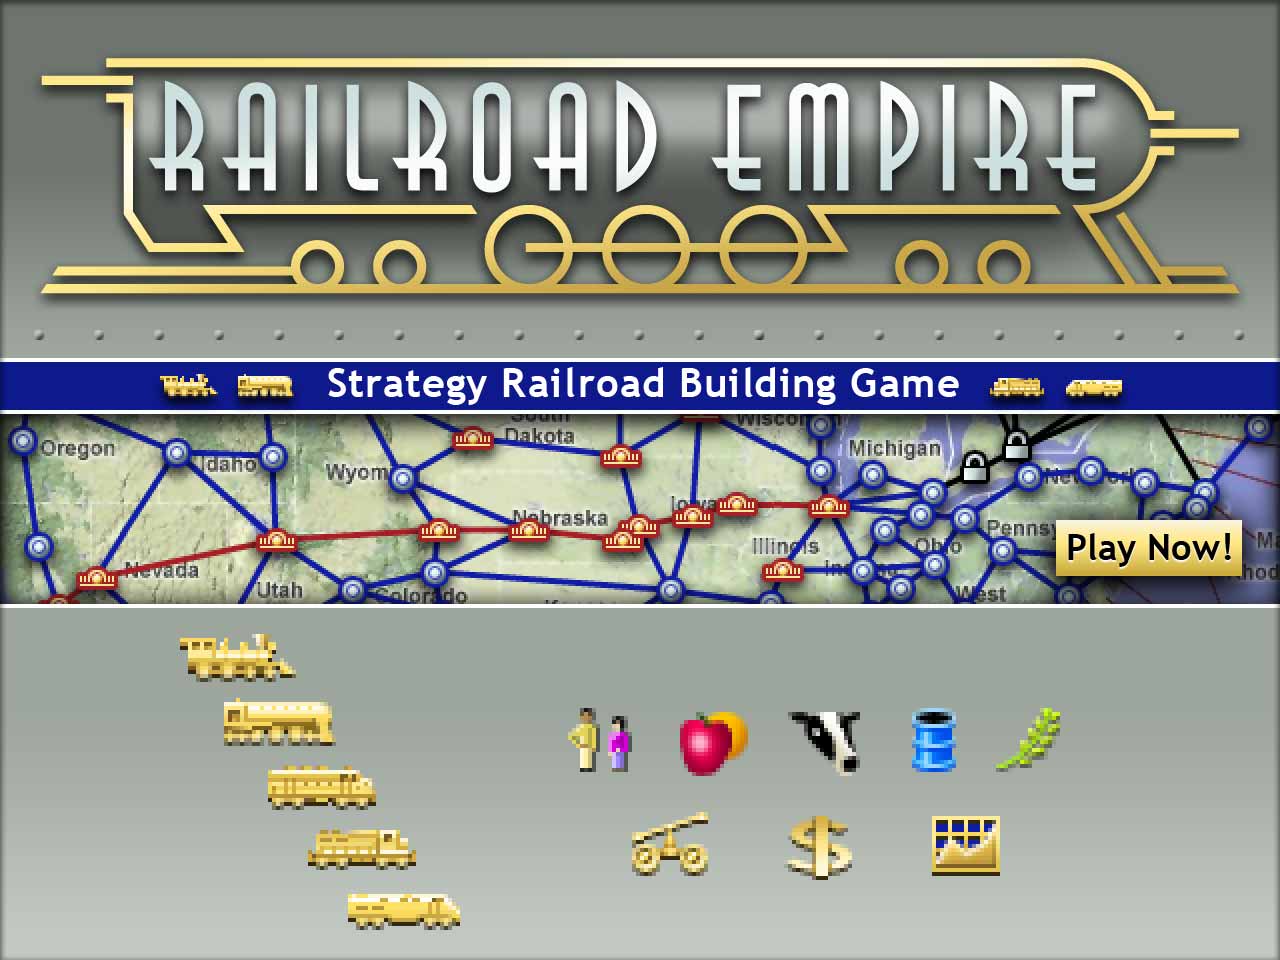 Railroad Empire logo and illustrations